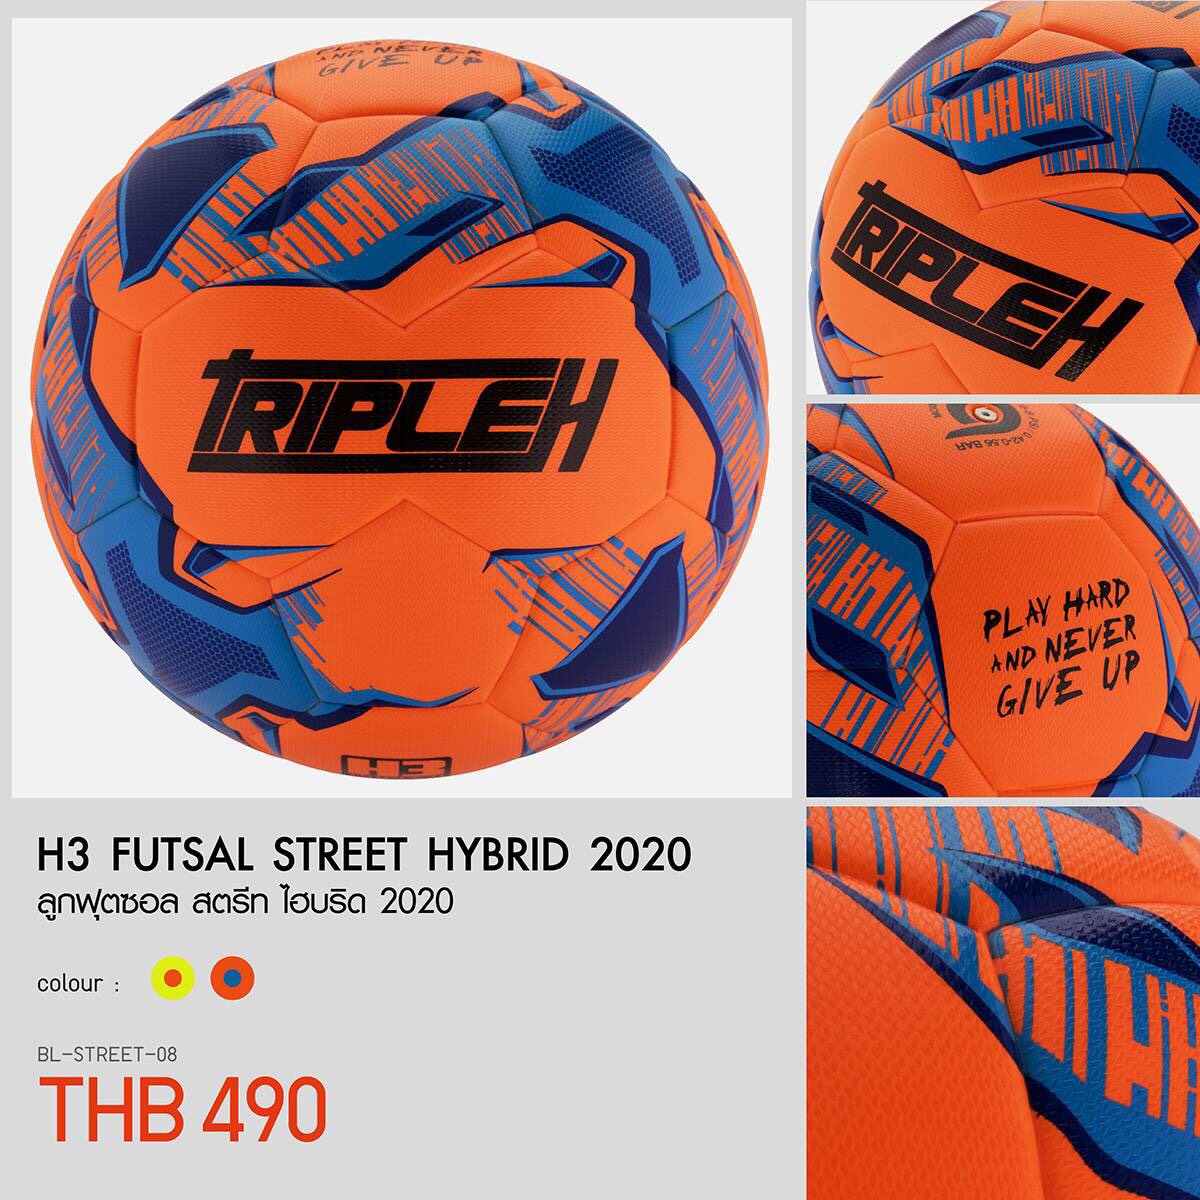 H3 ลูกฟุตซอลหนังอัด ทริปเปิ้ลเอช  Futsal Ball แถมฟรี : ตาข่ายใส่ฟุตบอล และ เข็มสูบลม